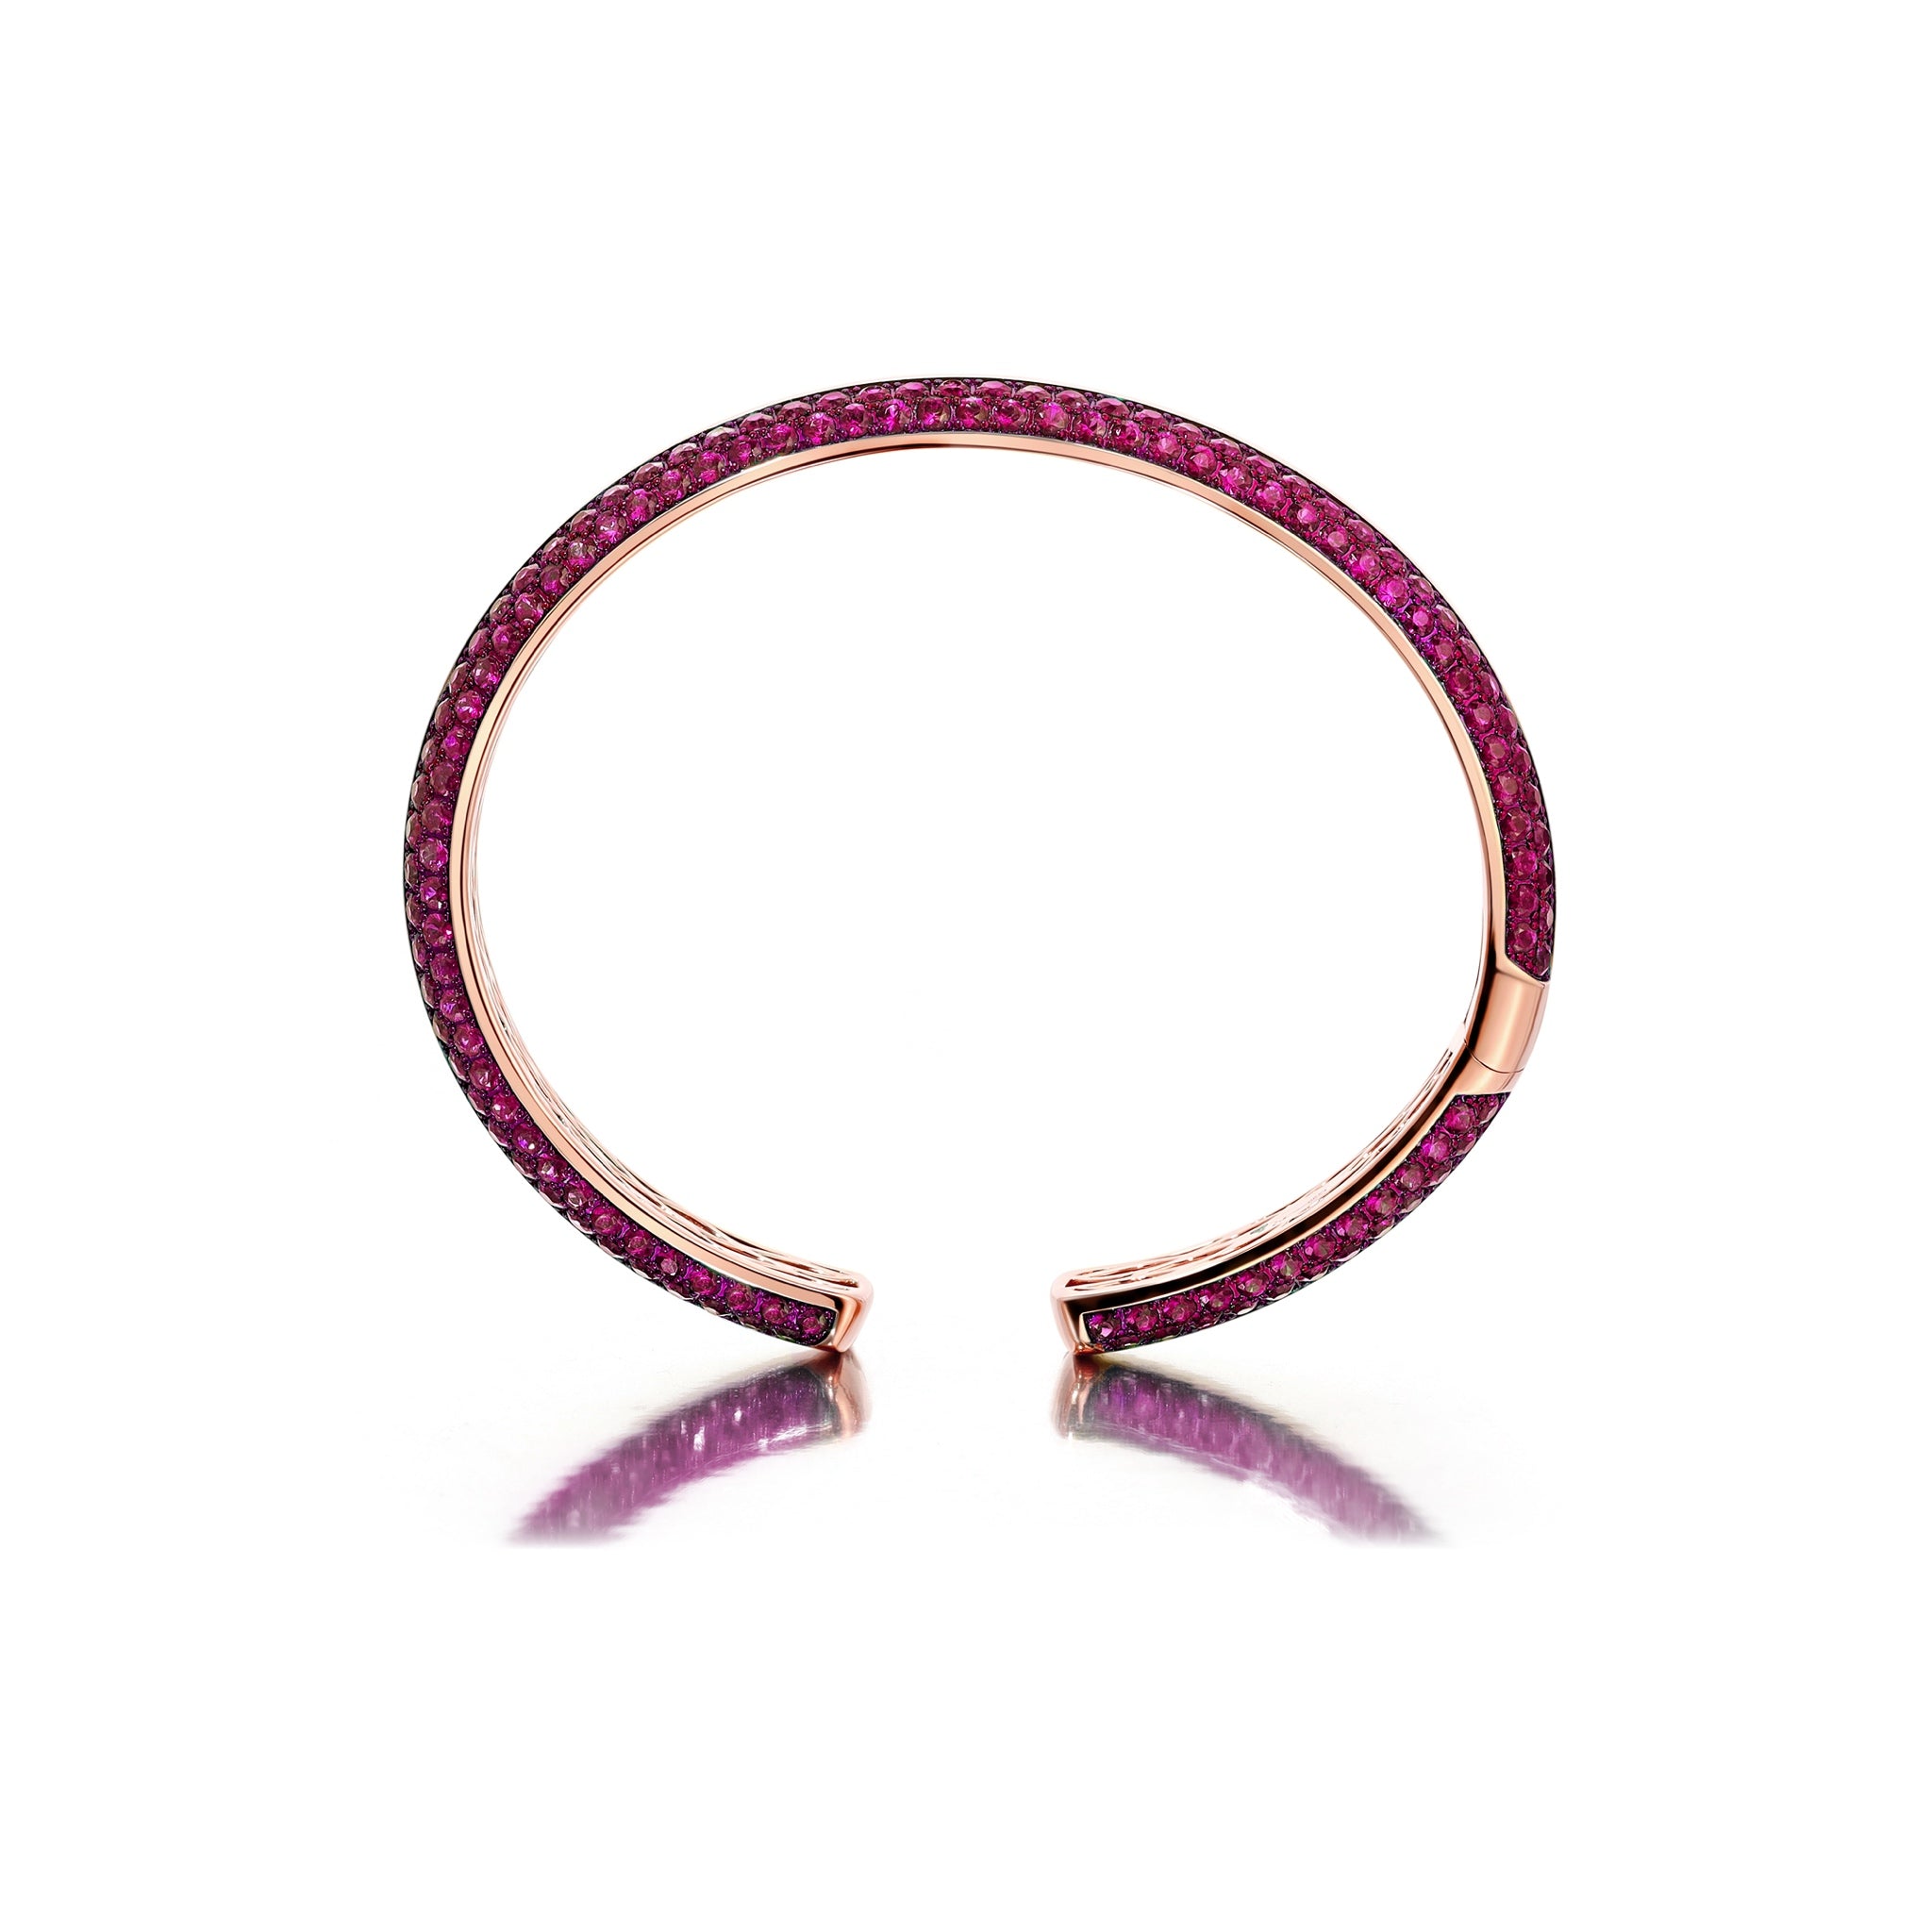 Ouro Pink Sapphire Bangle